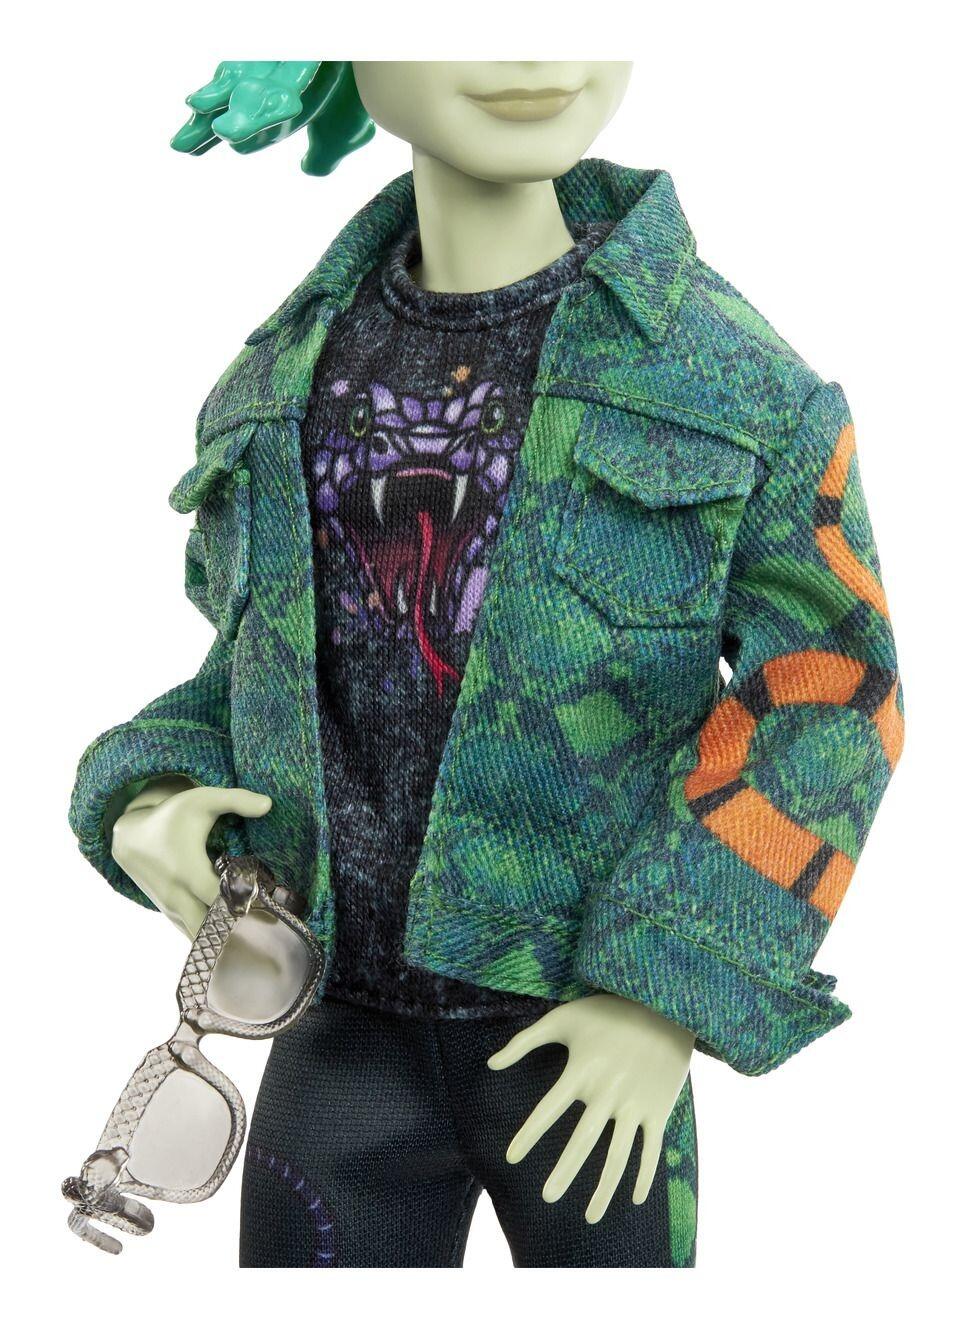 Monster High Deuce Gorgon Fashion Doll